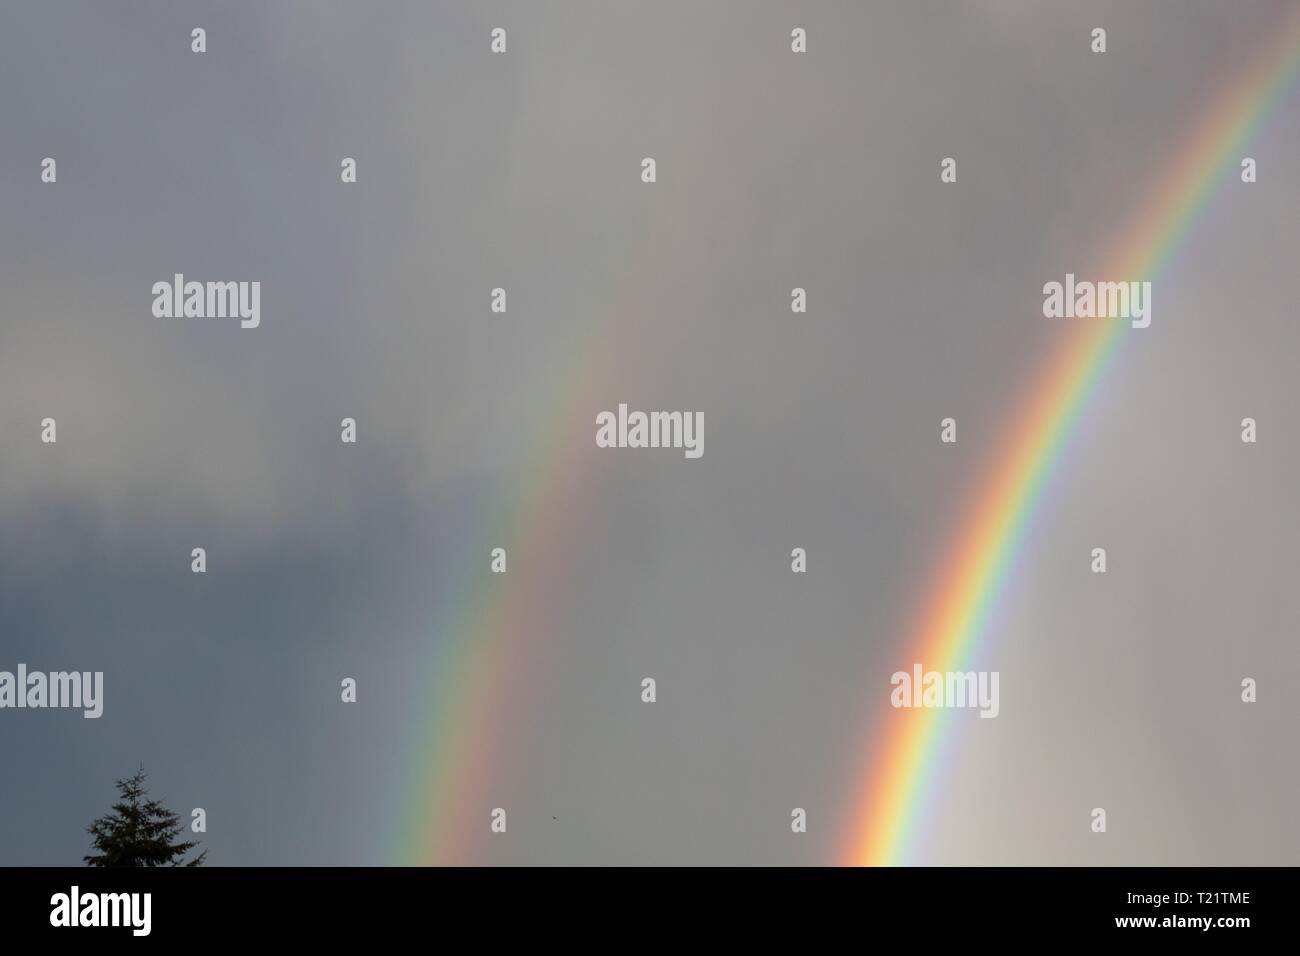 An extremely bright double rainbow over Eugene, Oregon, USA. Stock Photo